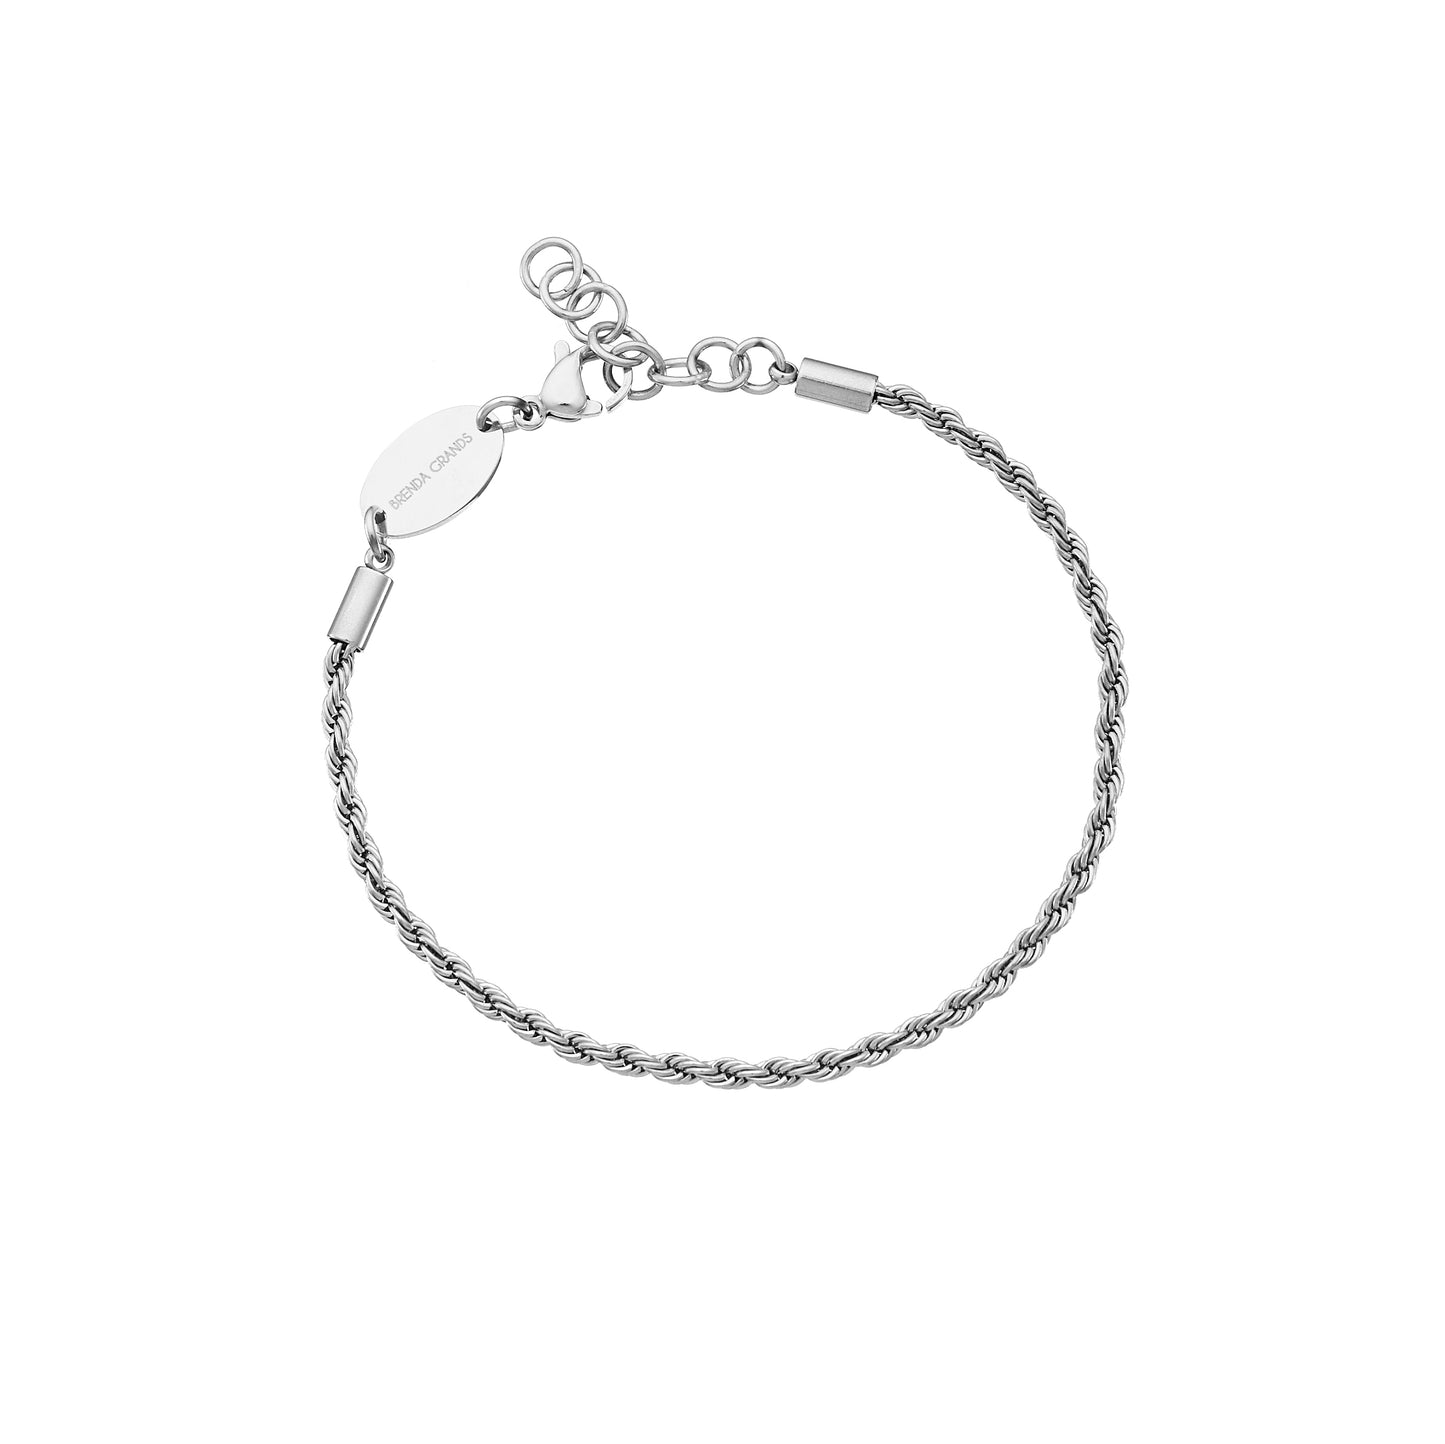 Silver Rope Chain Bracelet